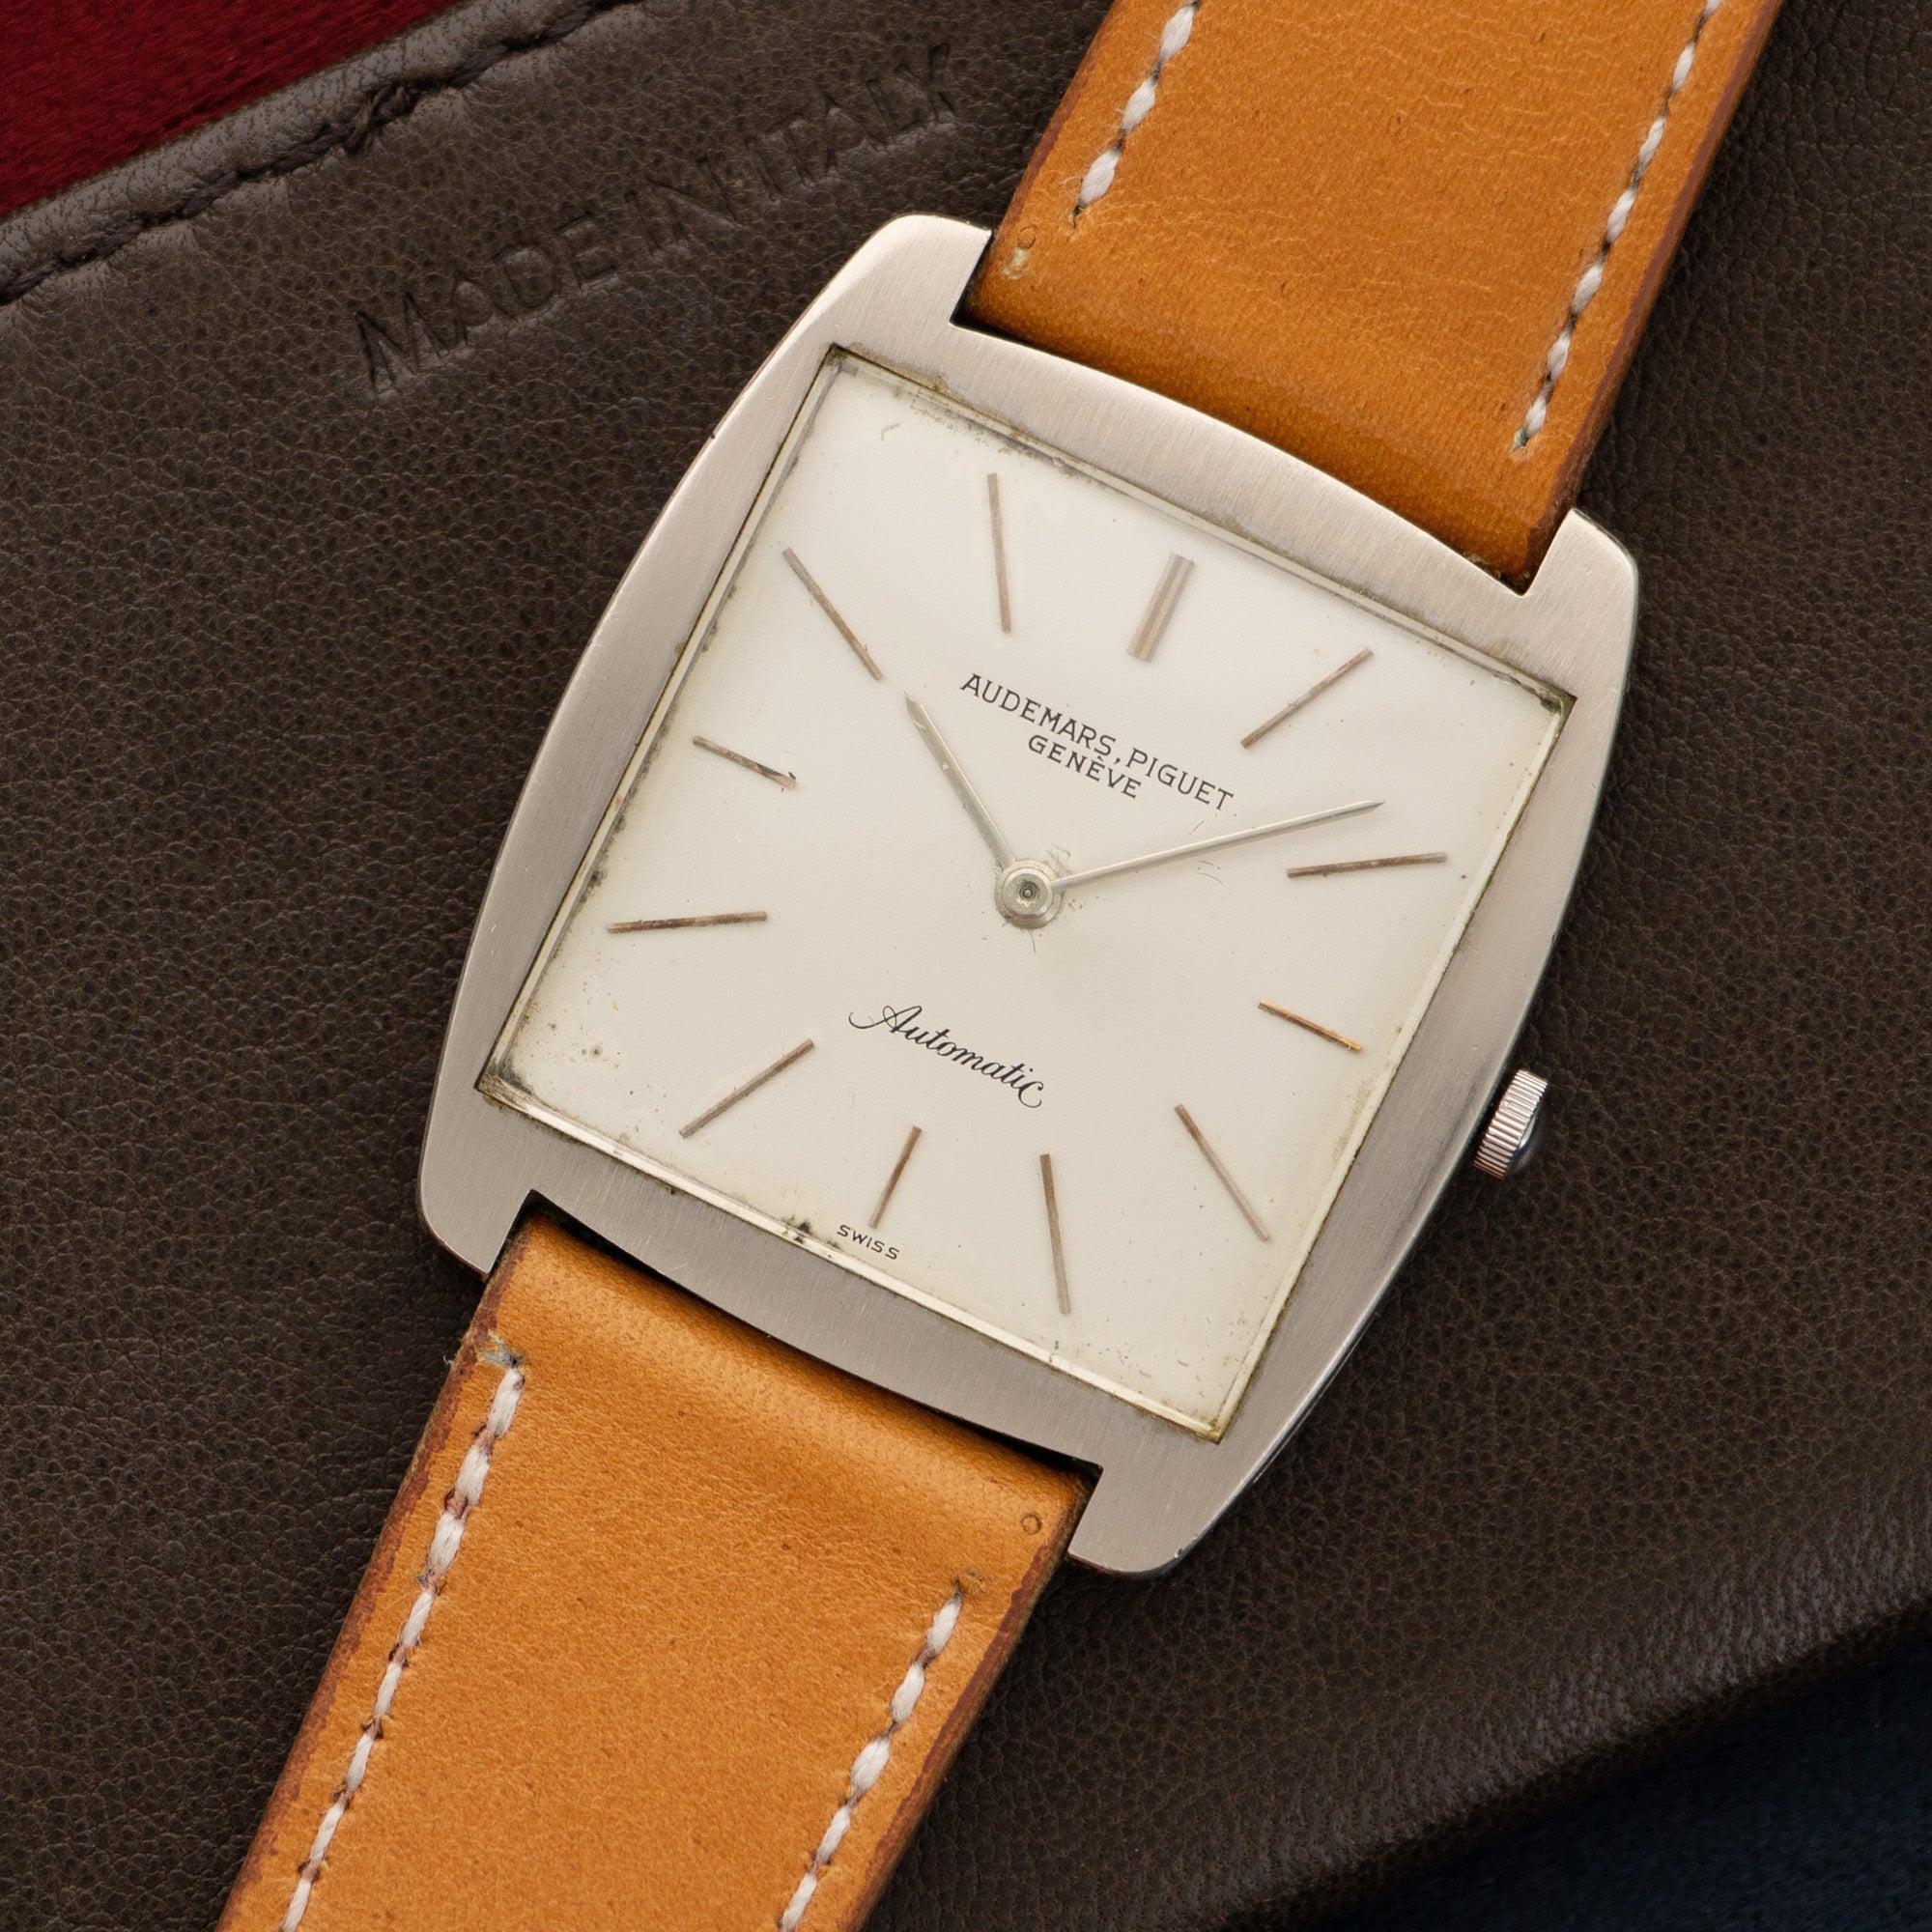 Audemars Piguet - Audemars Piguet White Gold Automatic Watch Ref. 5186 - The Keystone Watches